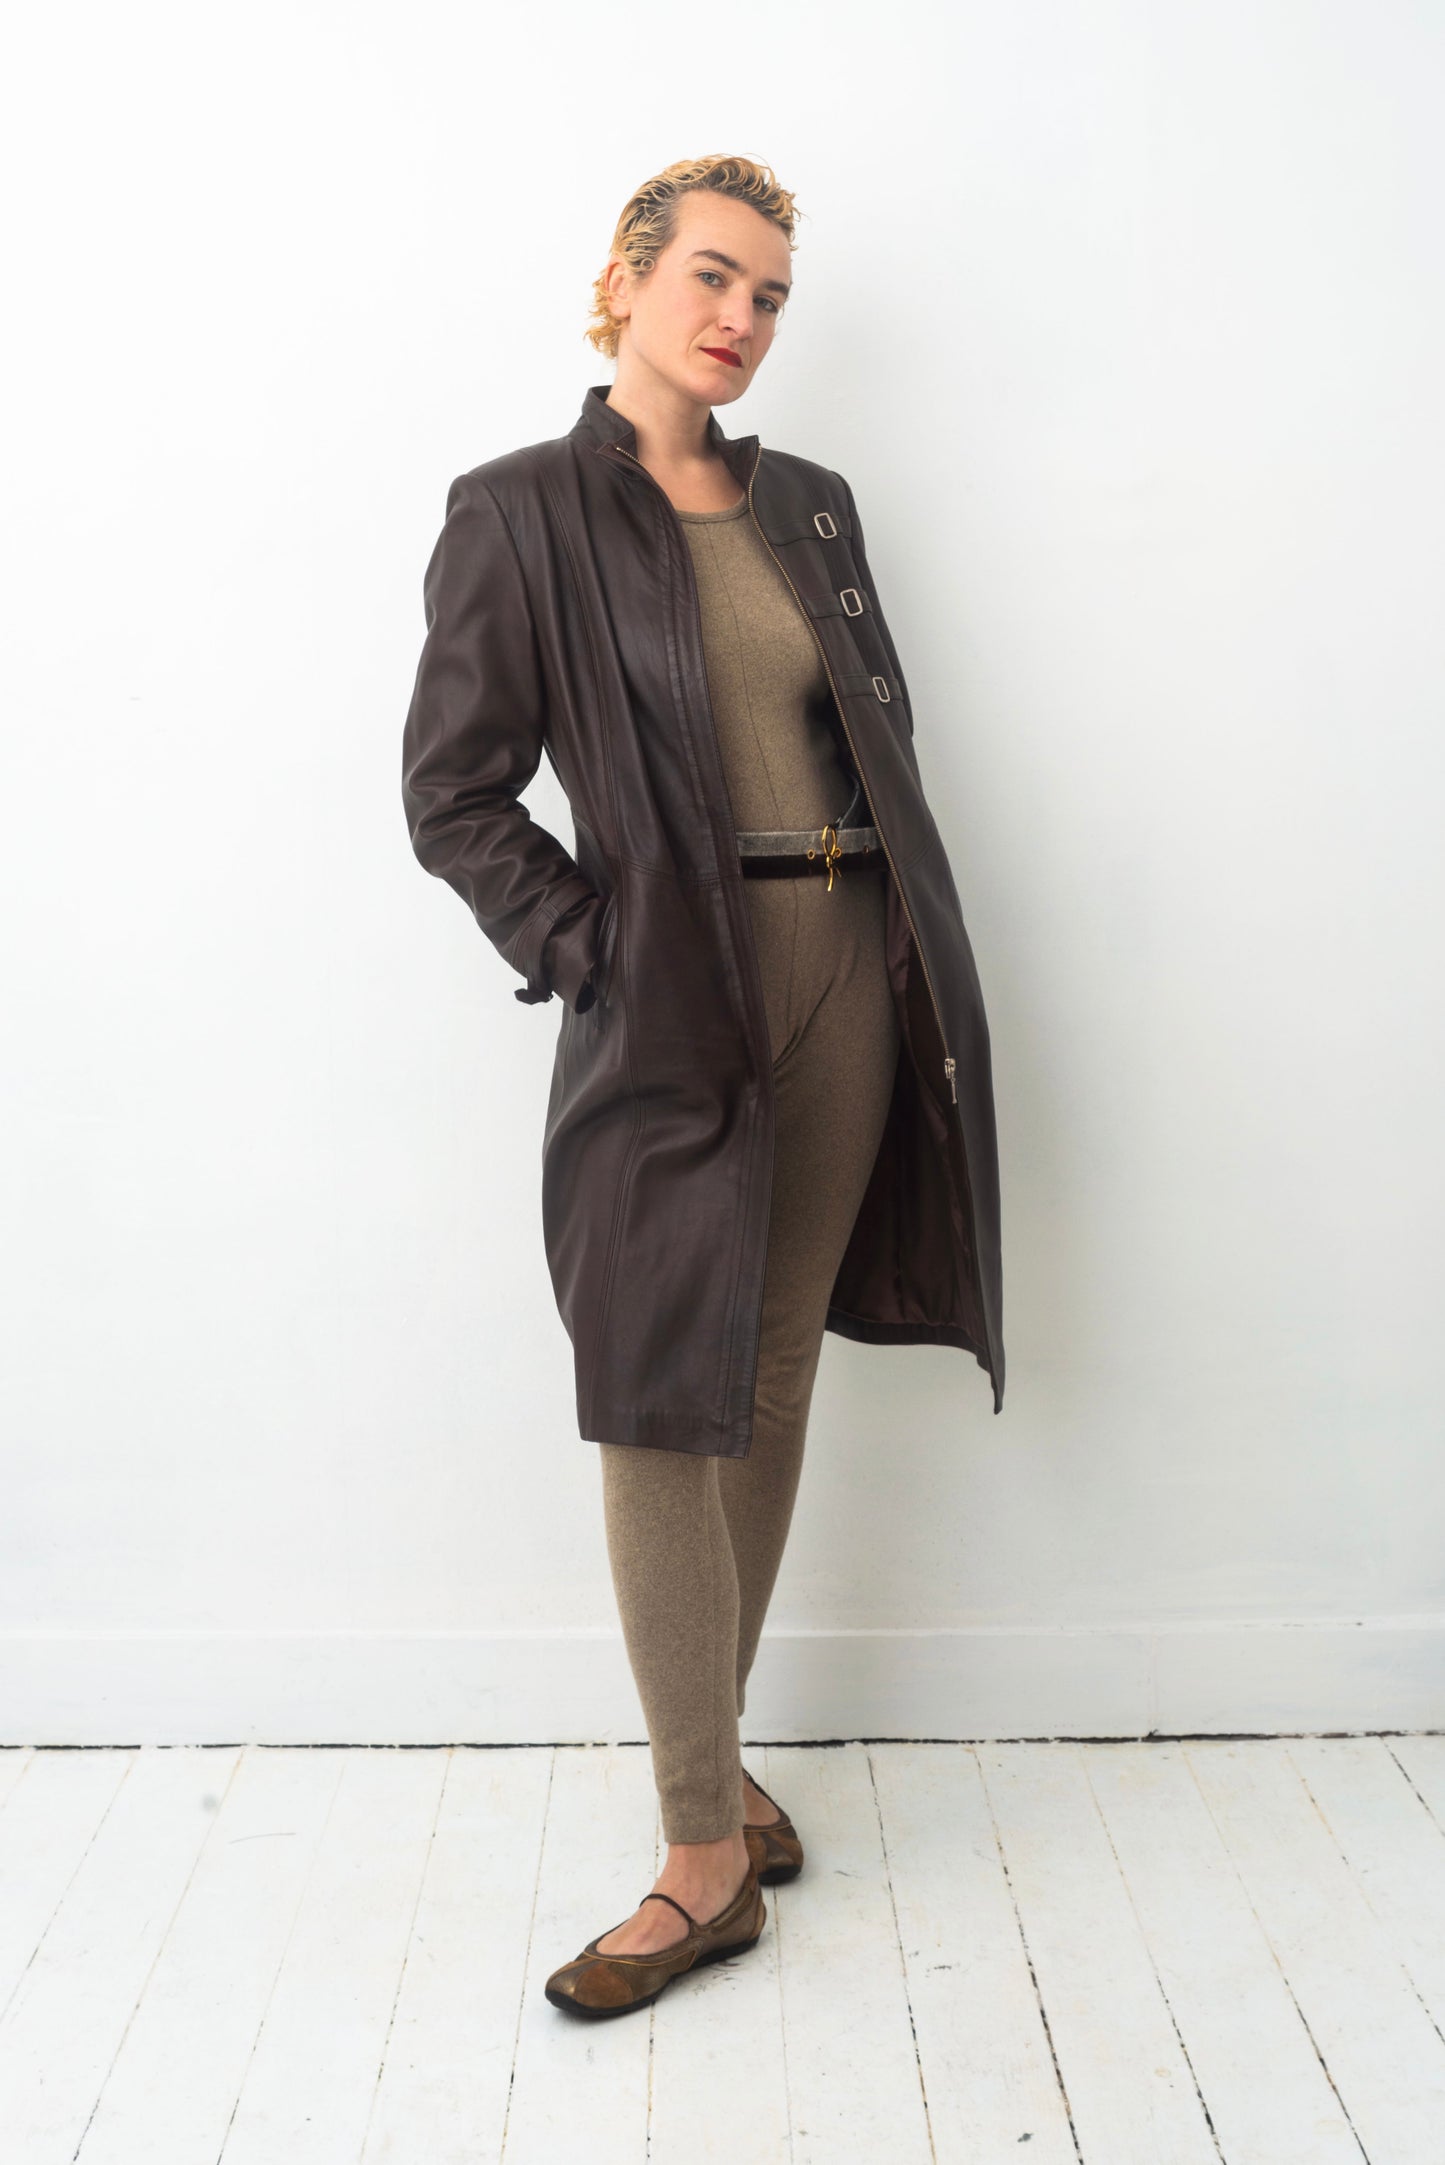 Jil Sander 2000’s leather long brown coat